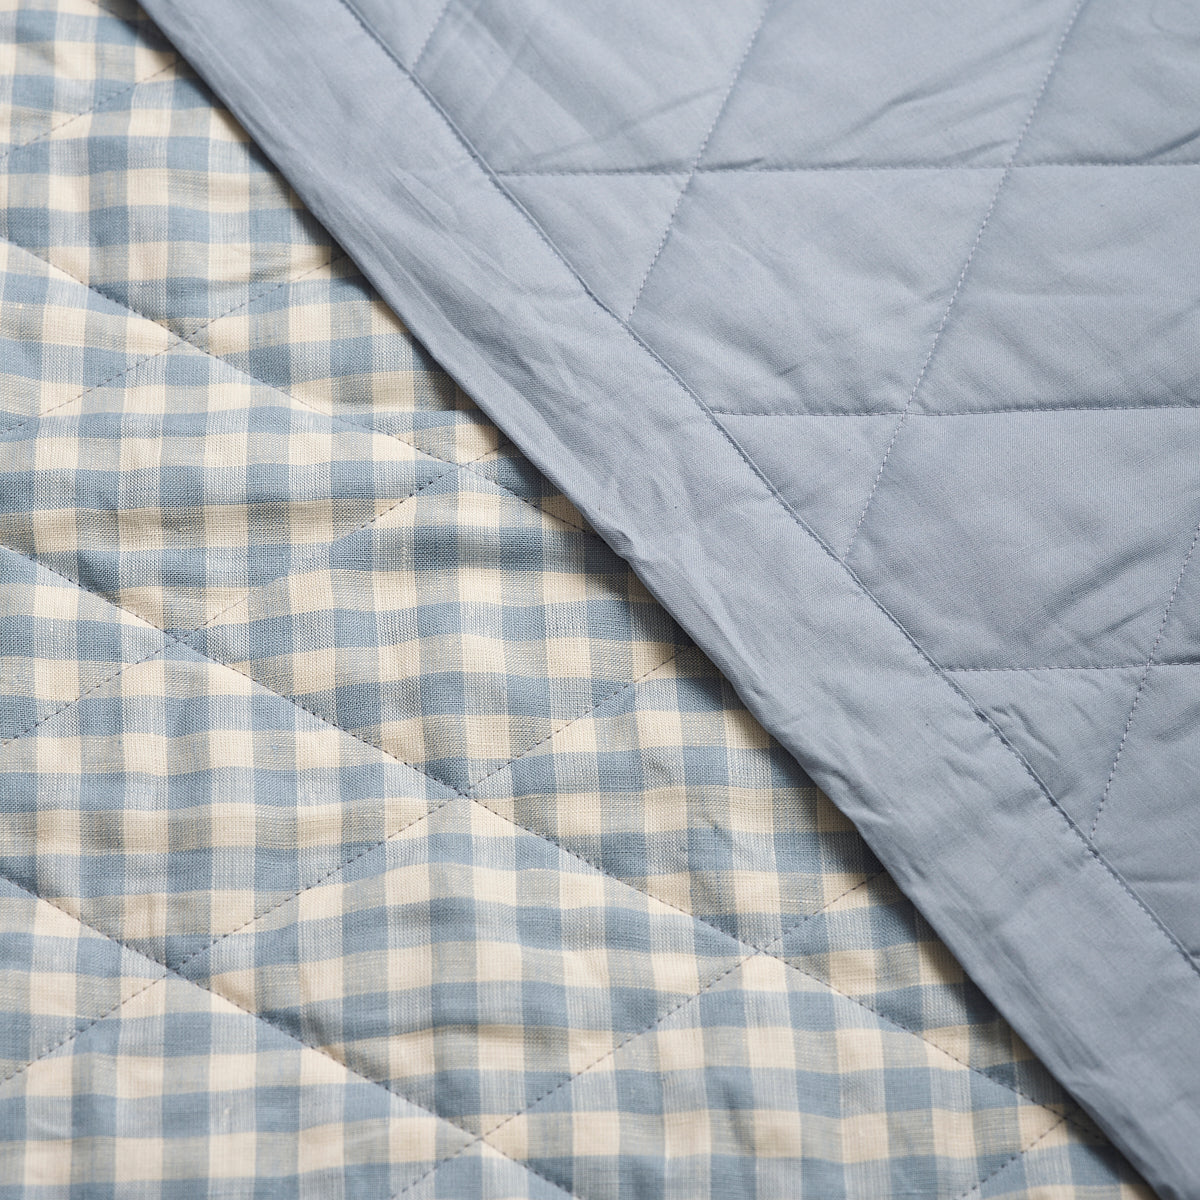 Piglet in Bed Warm Blue Gingham Wool Blanket